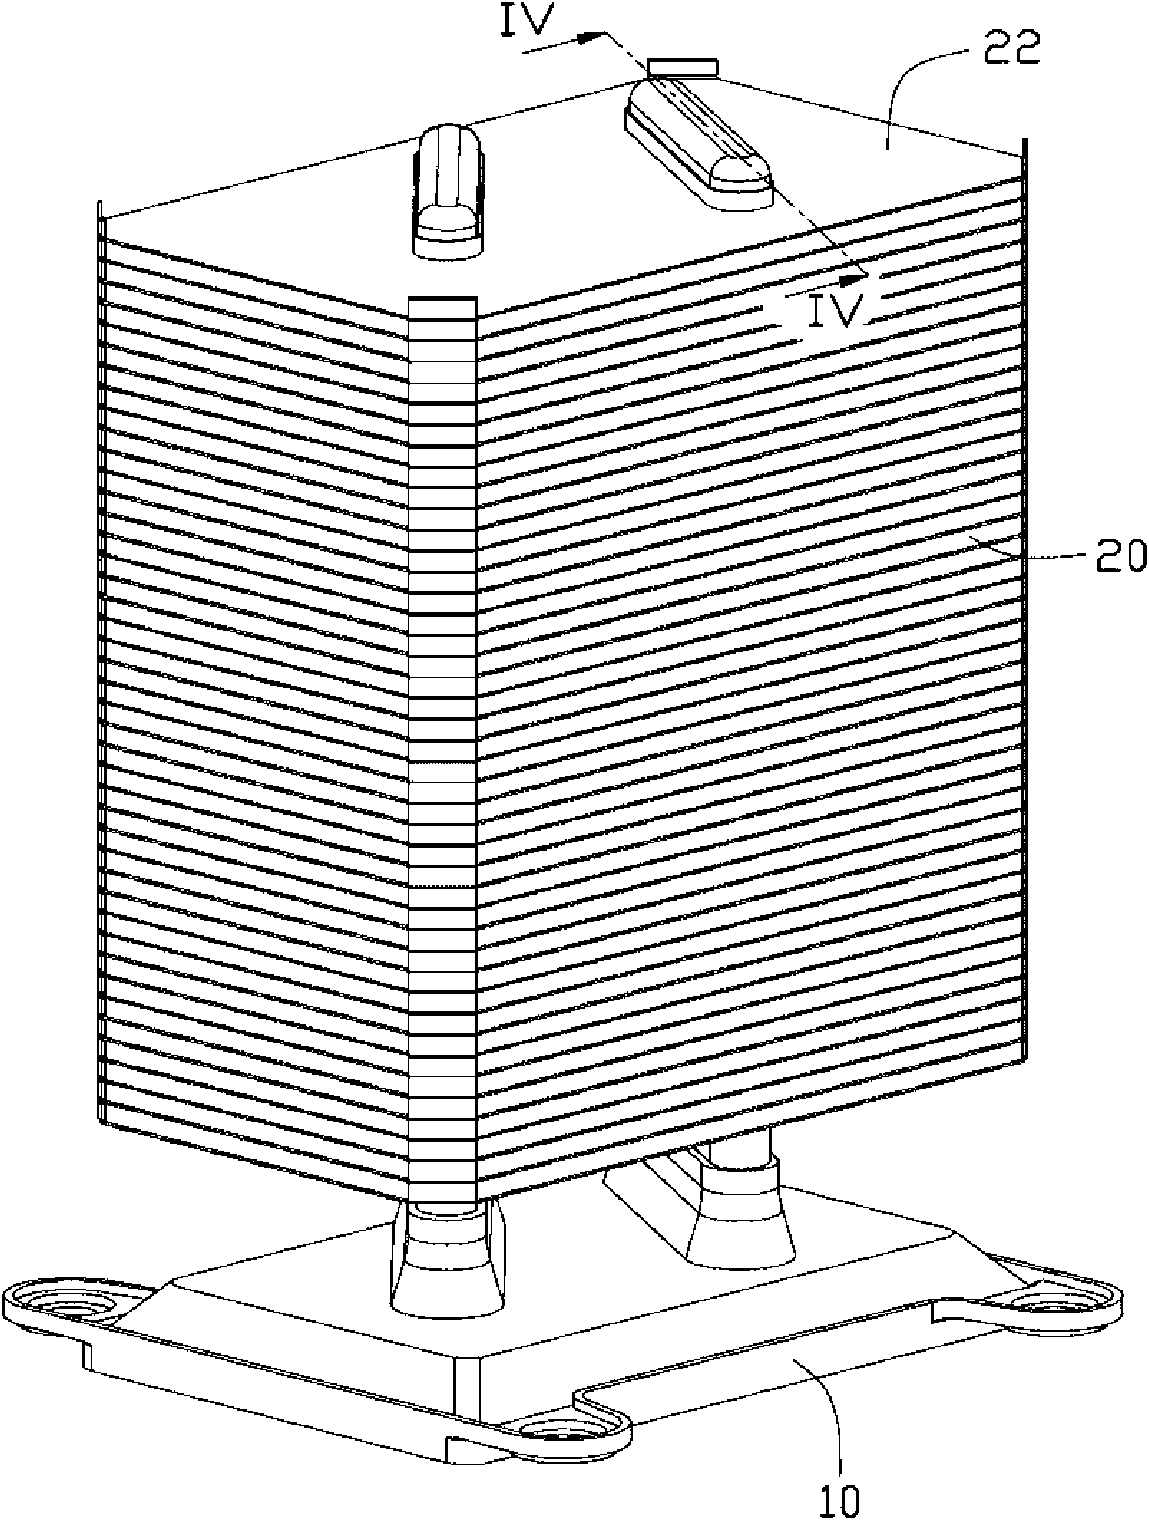 Heat radiator